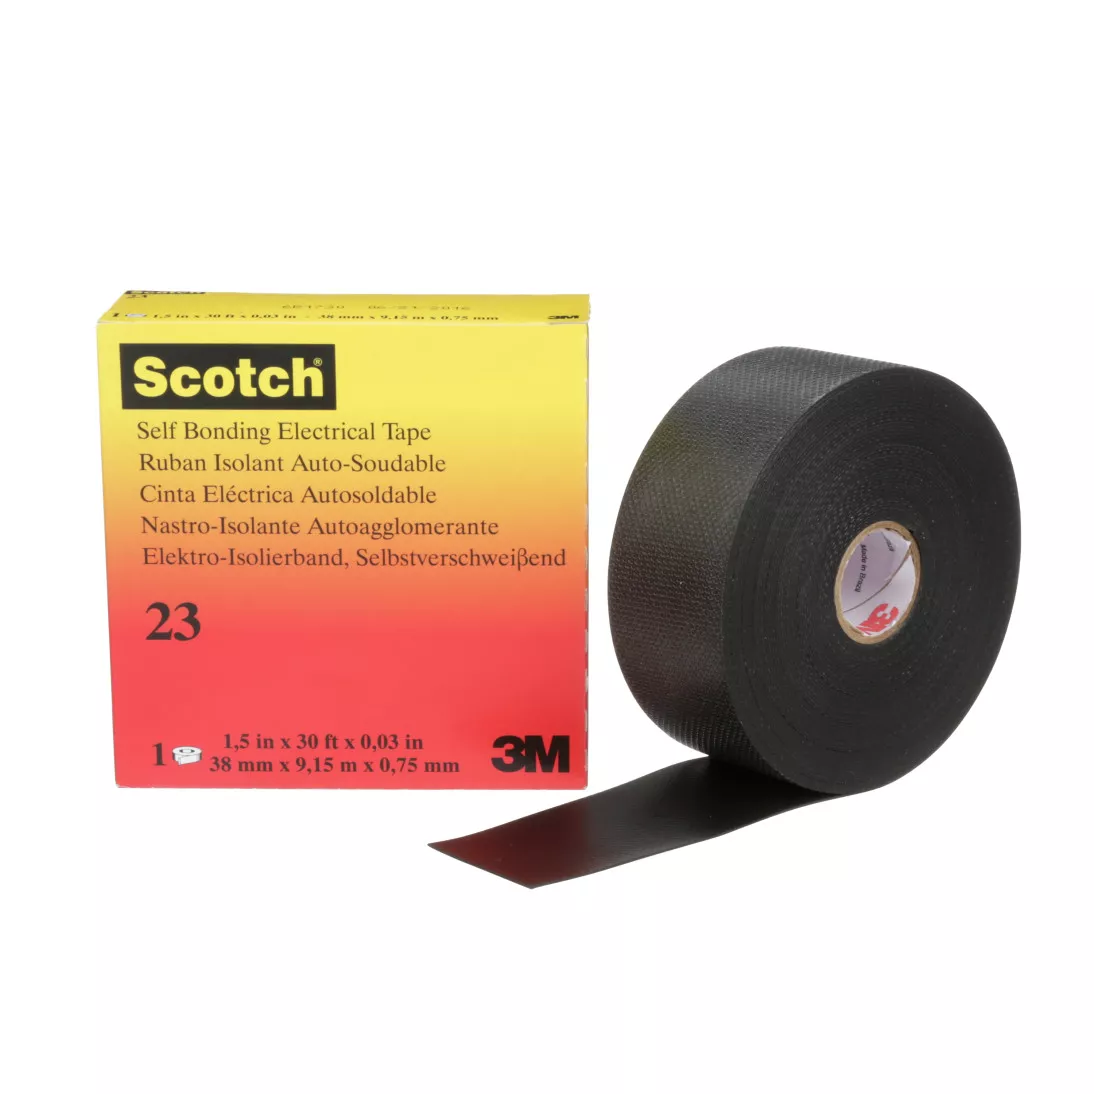 Scotch® Rubber Splicing Tape 23, 1-1/2 in x 30 ft, Black, 1 roll/carton,
20 rolls/Case